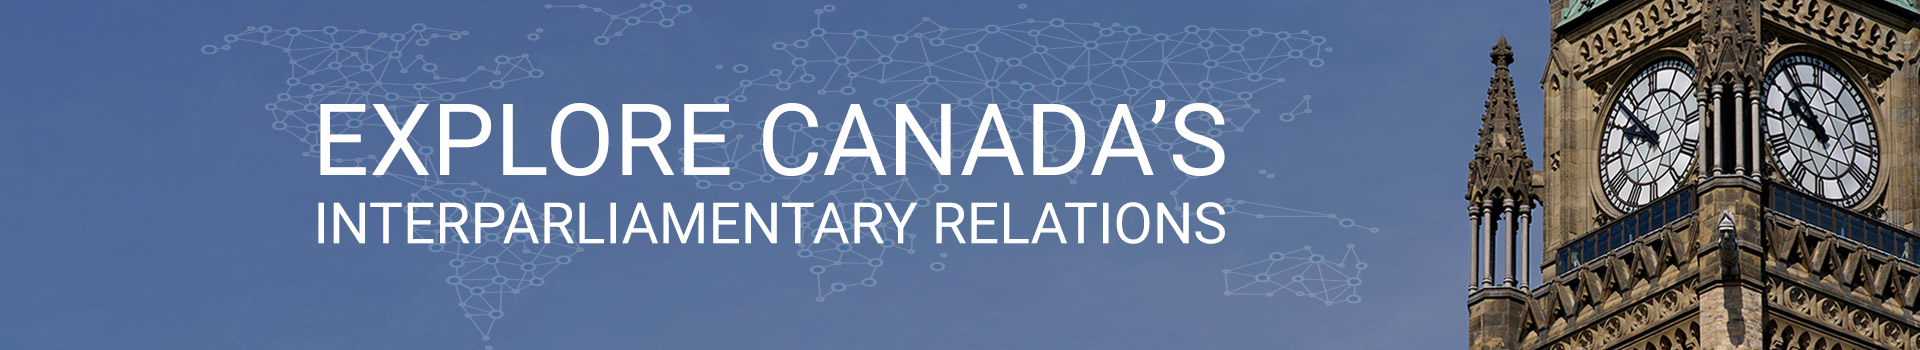 EXPLORE CANADA'S INTERPARLIAMENTARY RELATIONS